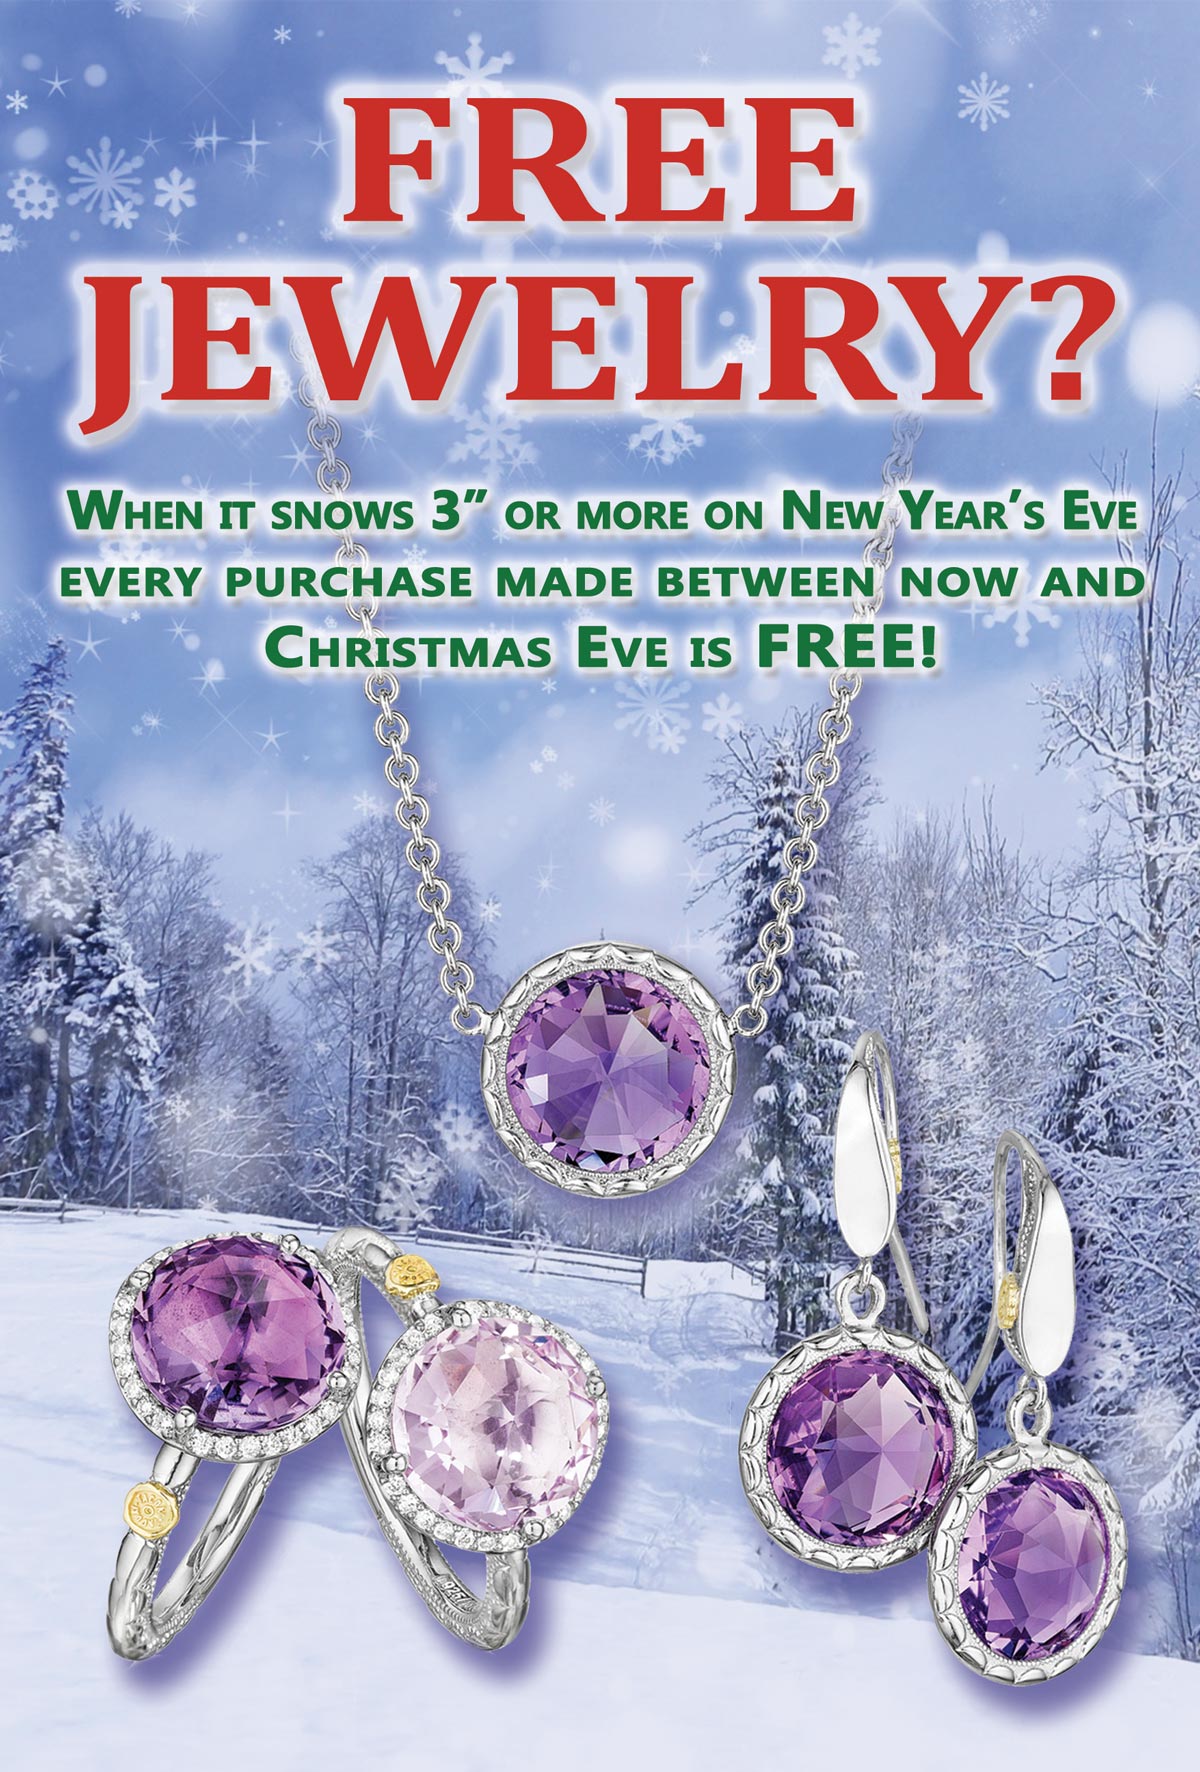 Free Jewelry Snow Promotion 2016